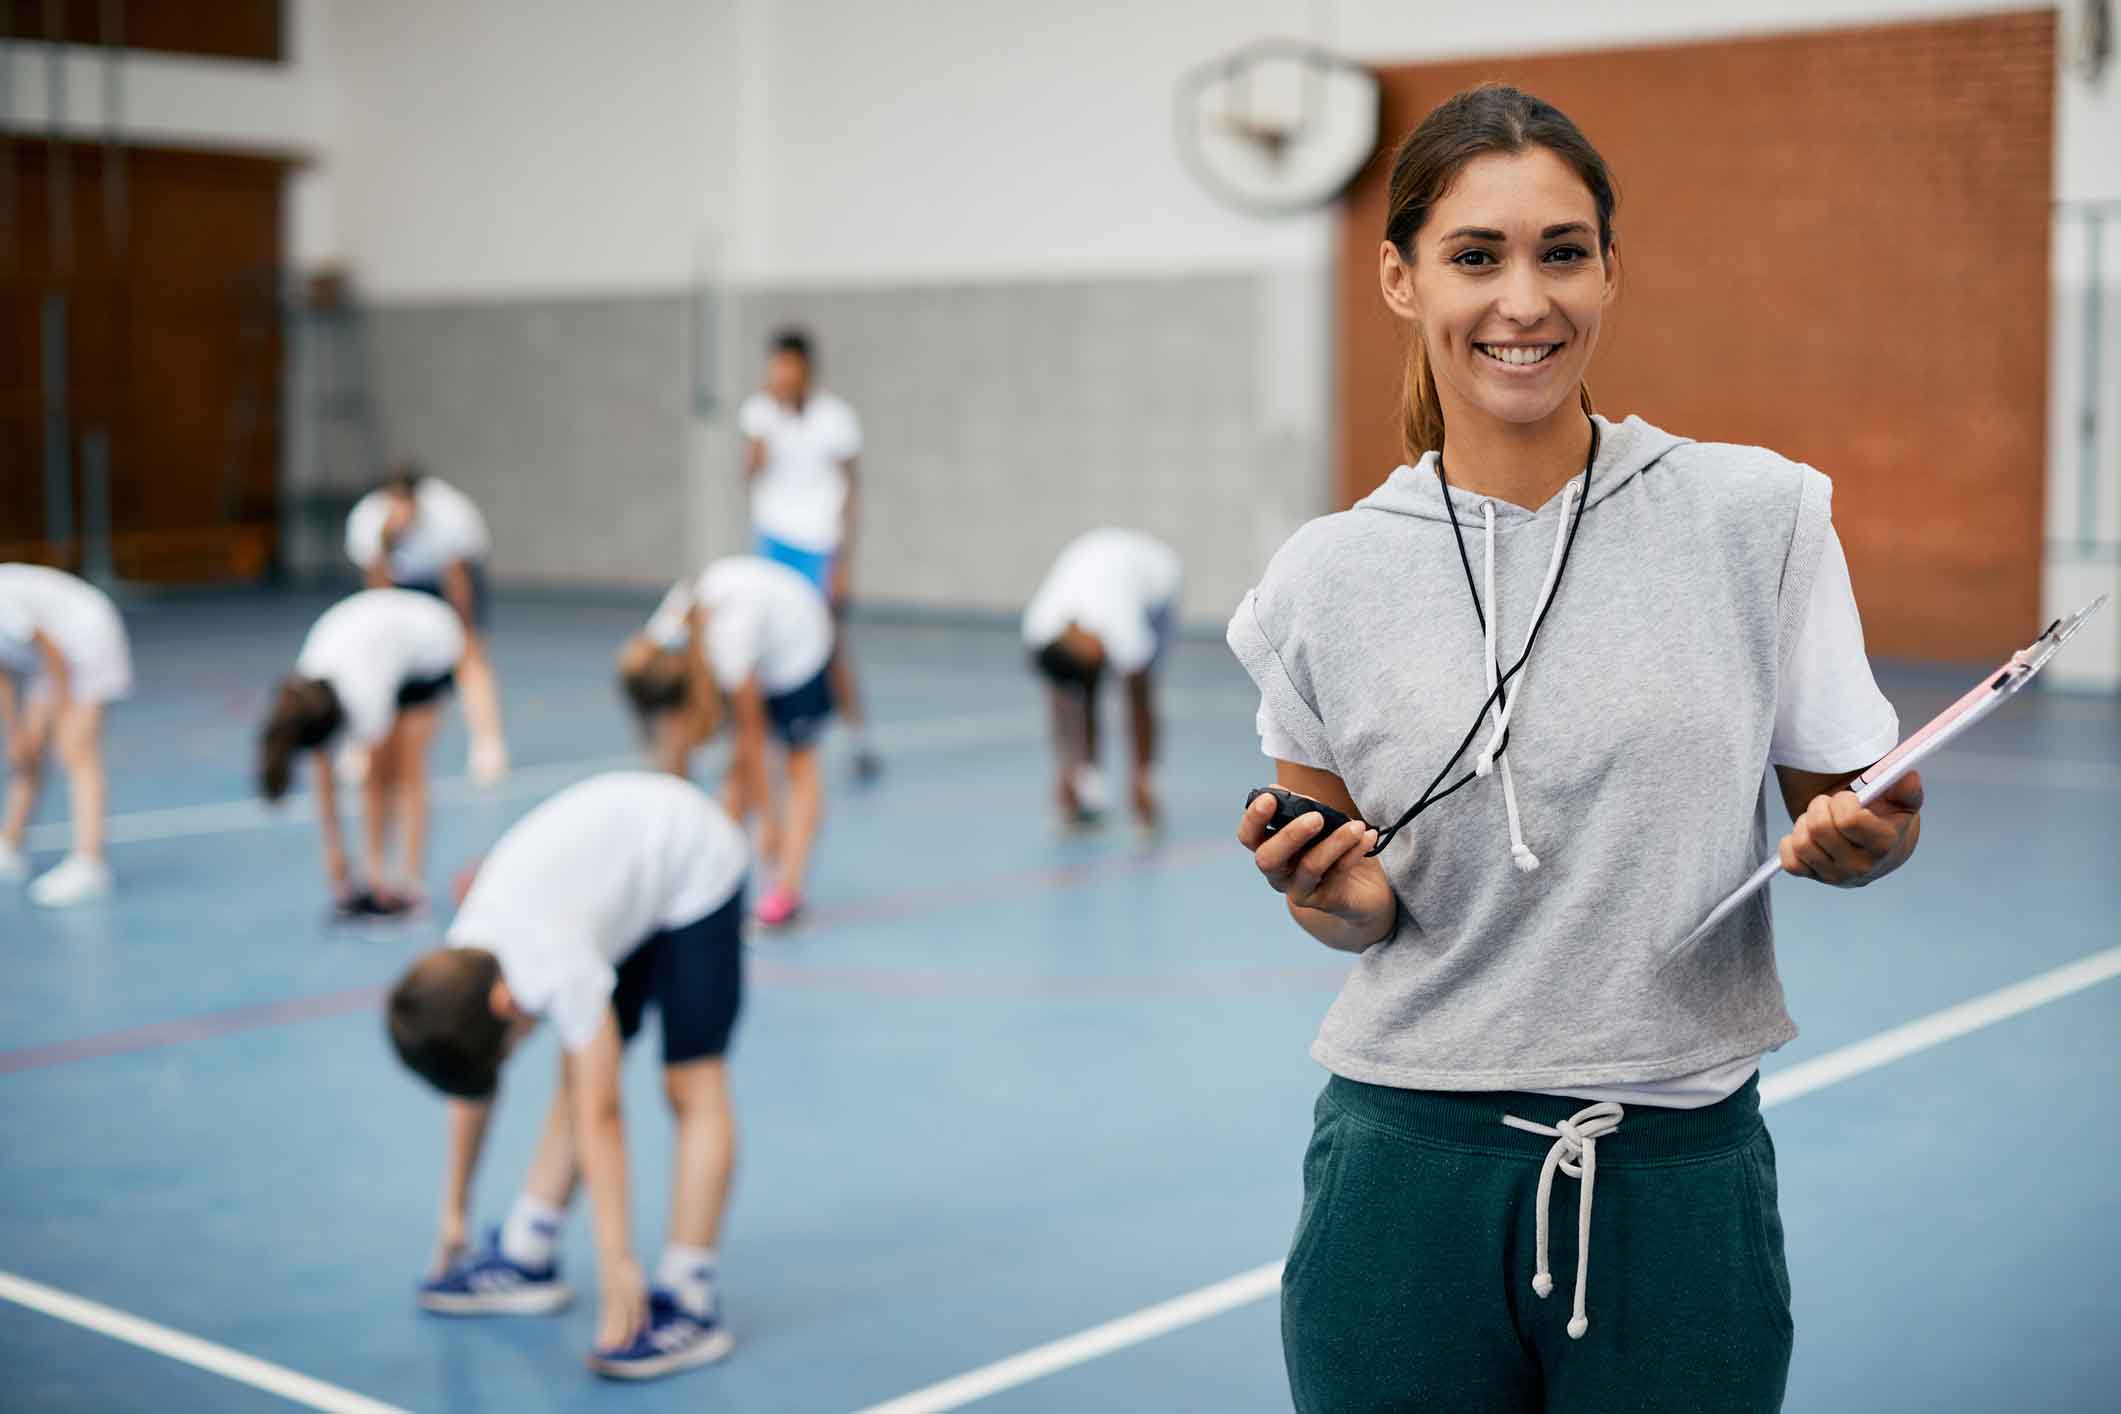 Portrait of happy female physical education teacher at school gym.